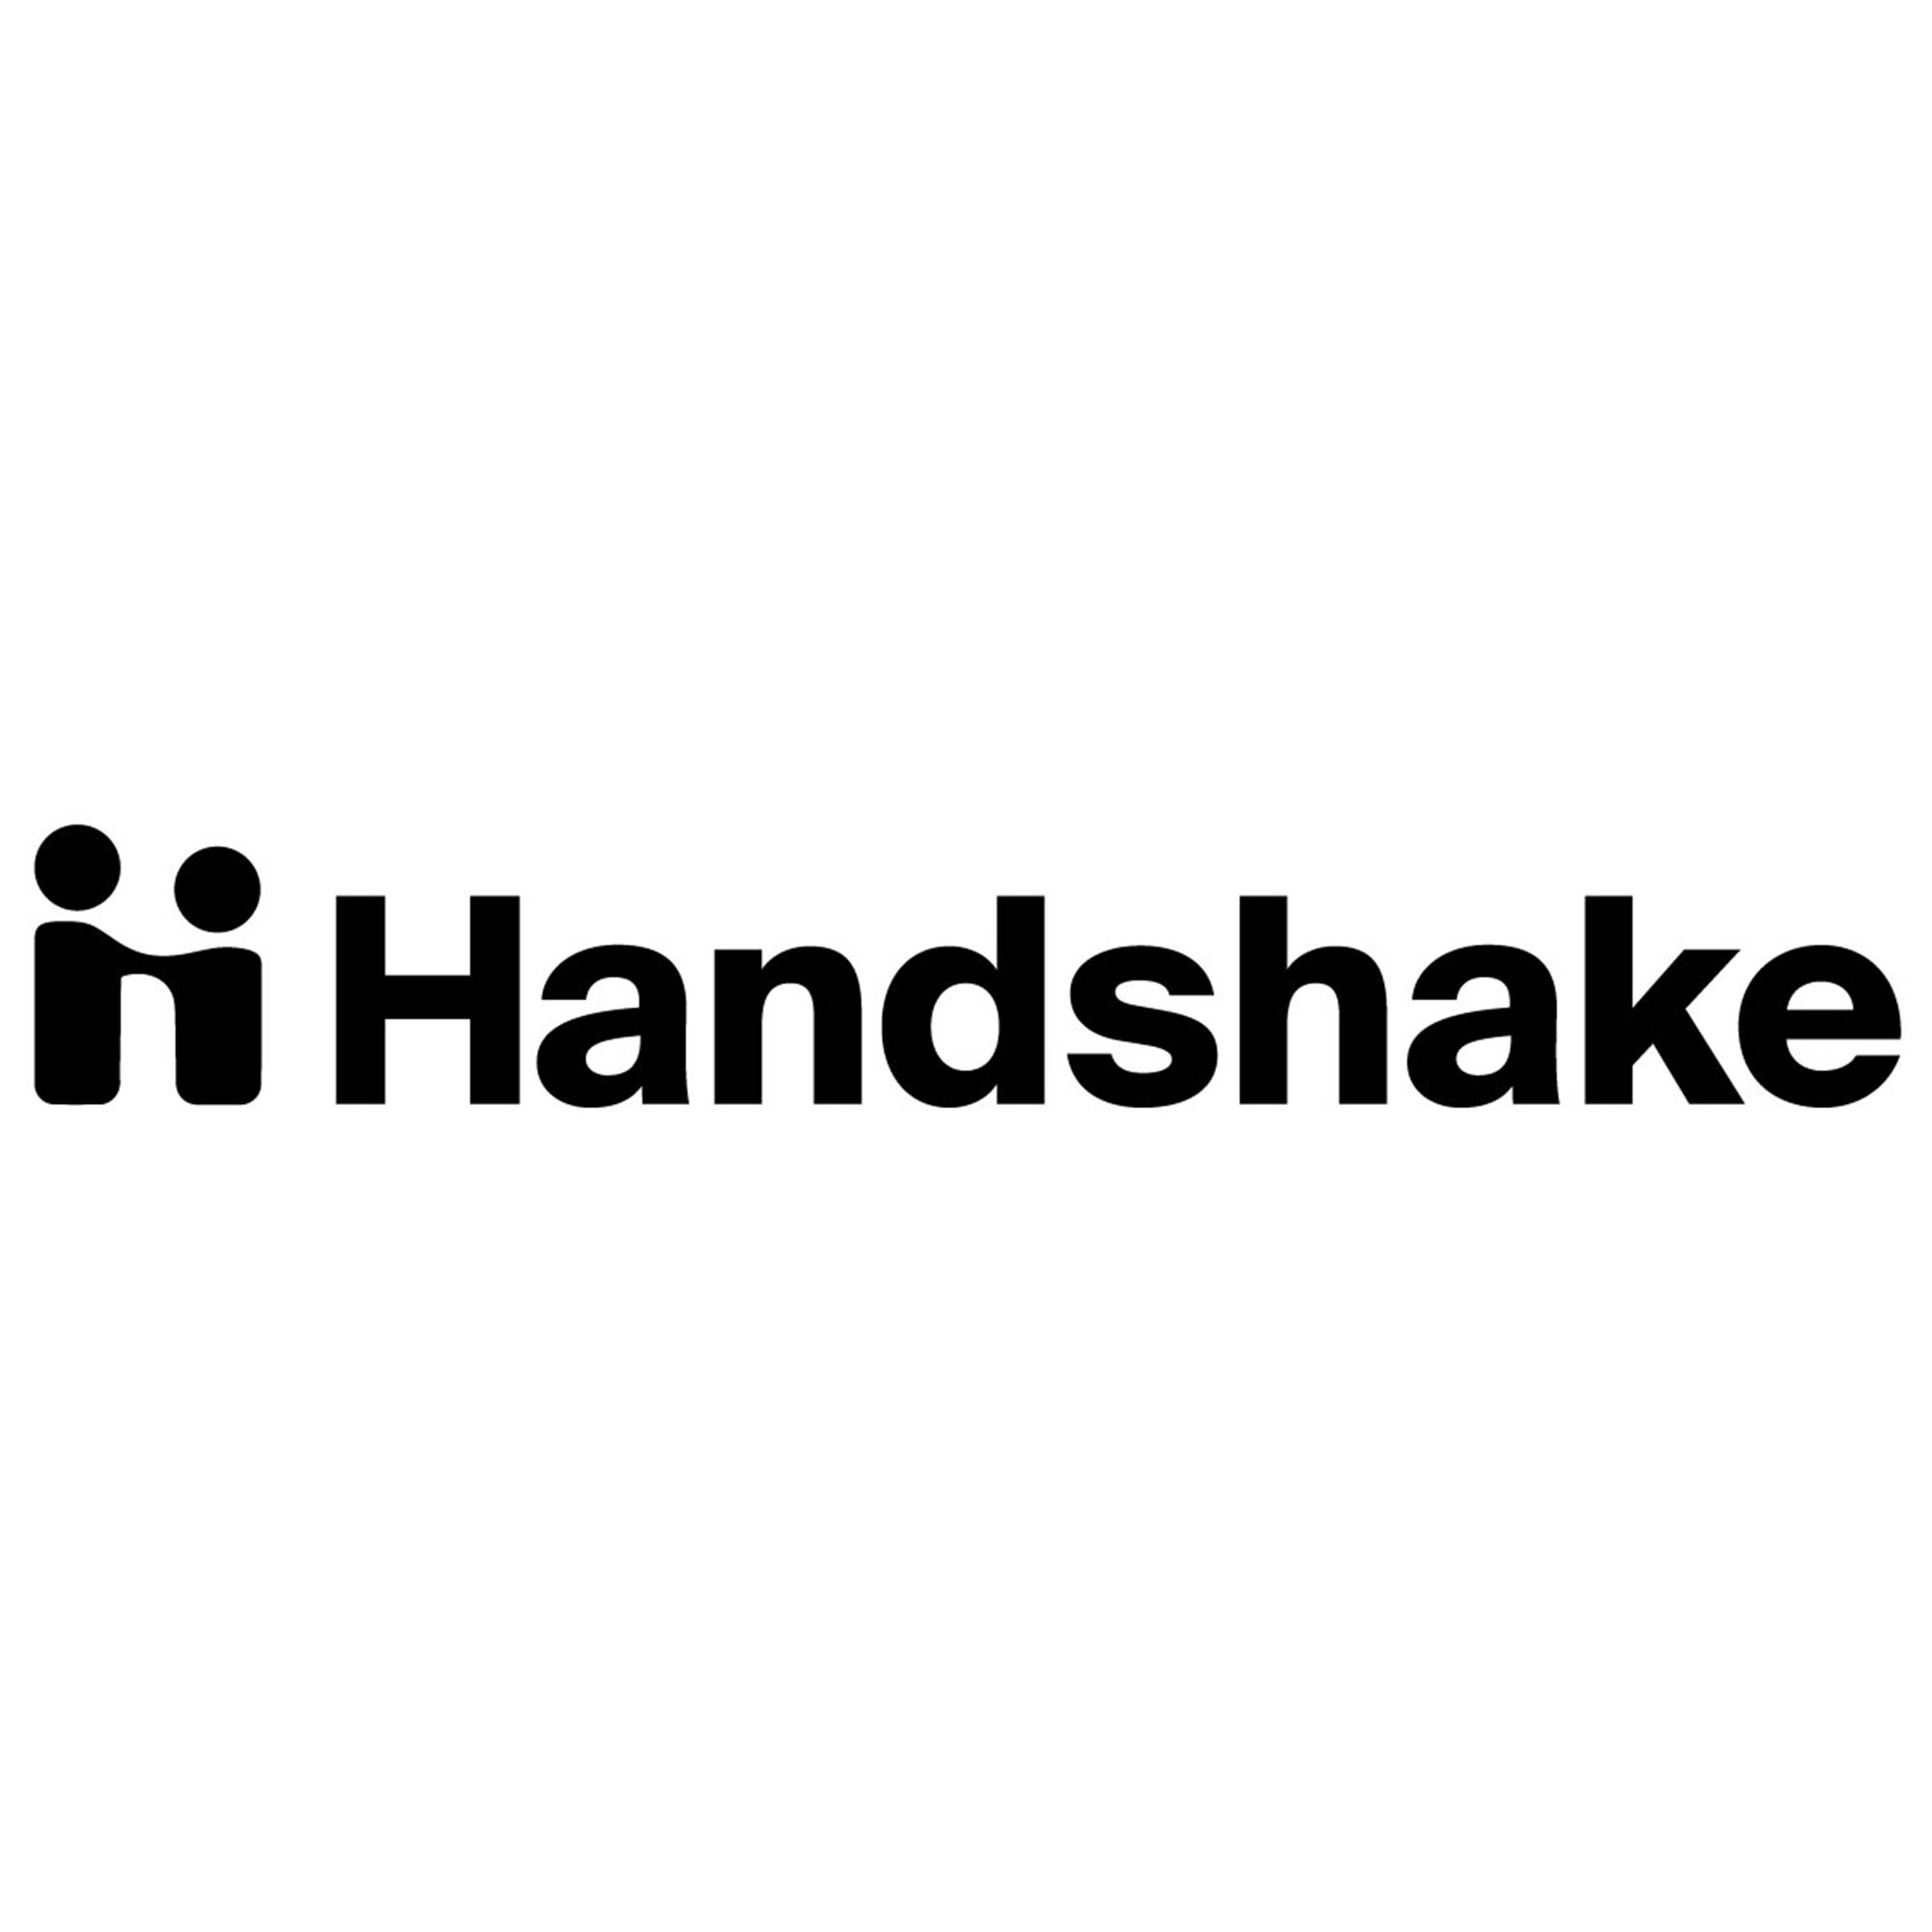 jobs4cats powered by handshake logo